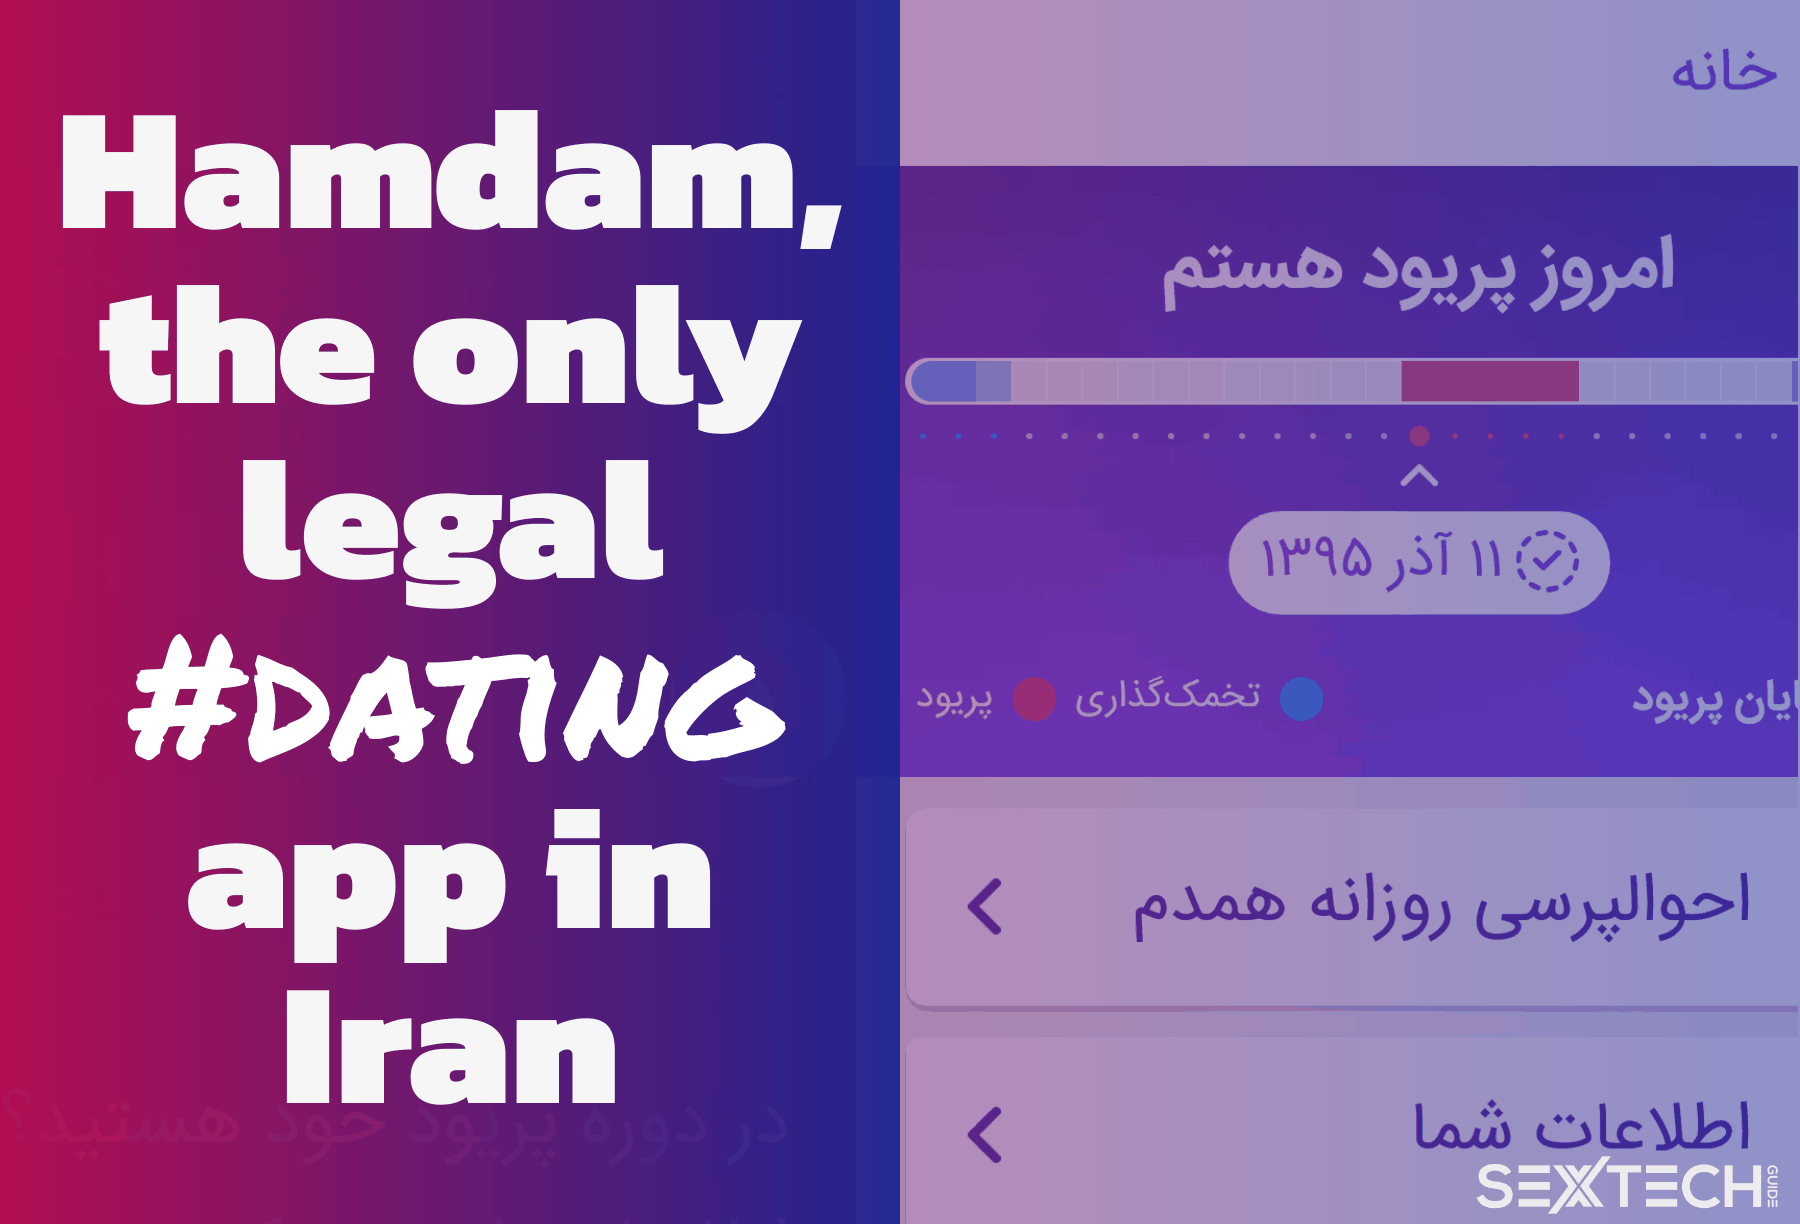 Hamdam is Iran's only legal dating app